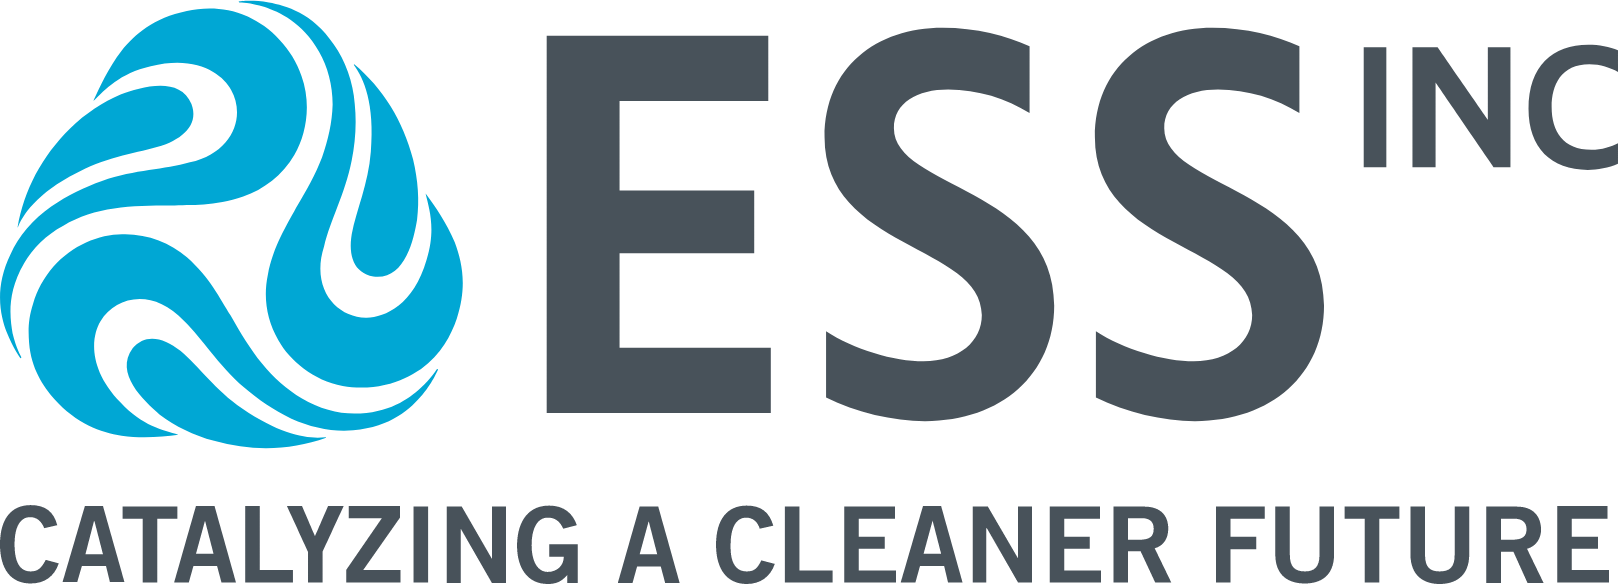 ESS Tech logo large (transparent PNG)